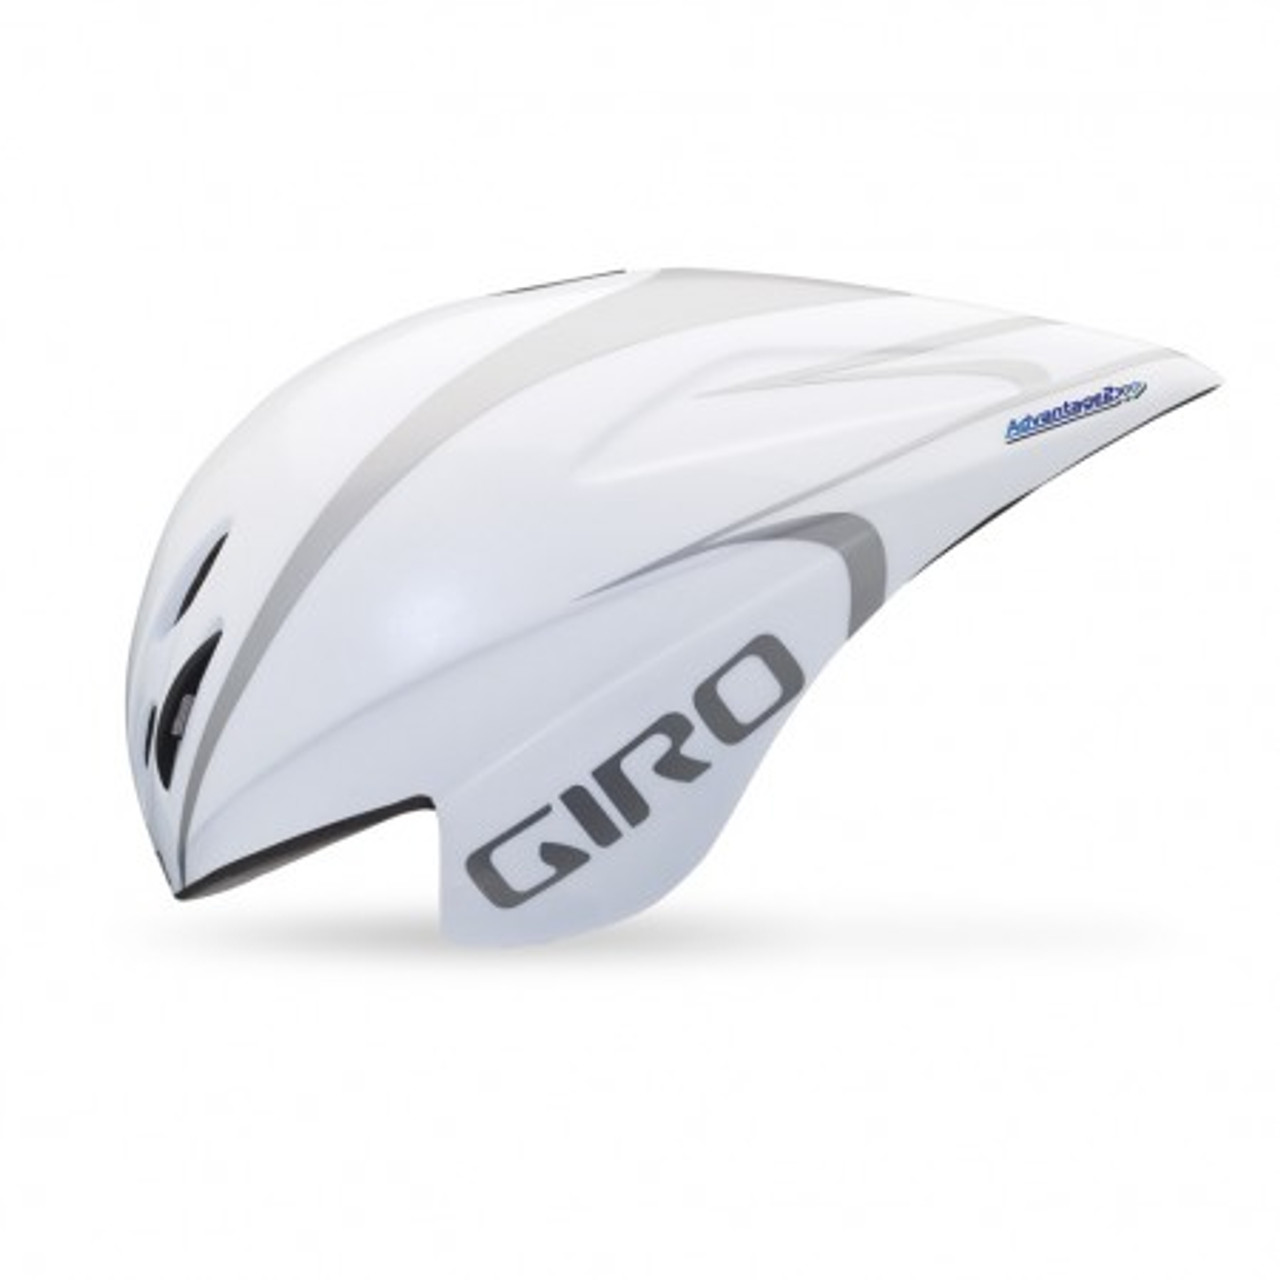 Texas Cyclesport Giro Advantage 2 Helmet GIR-ADV 164.99 New